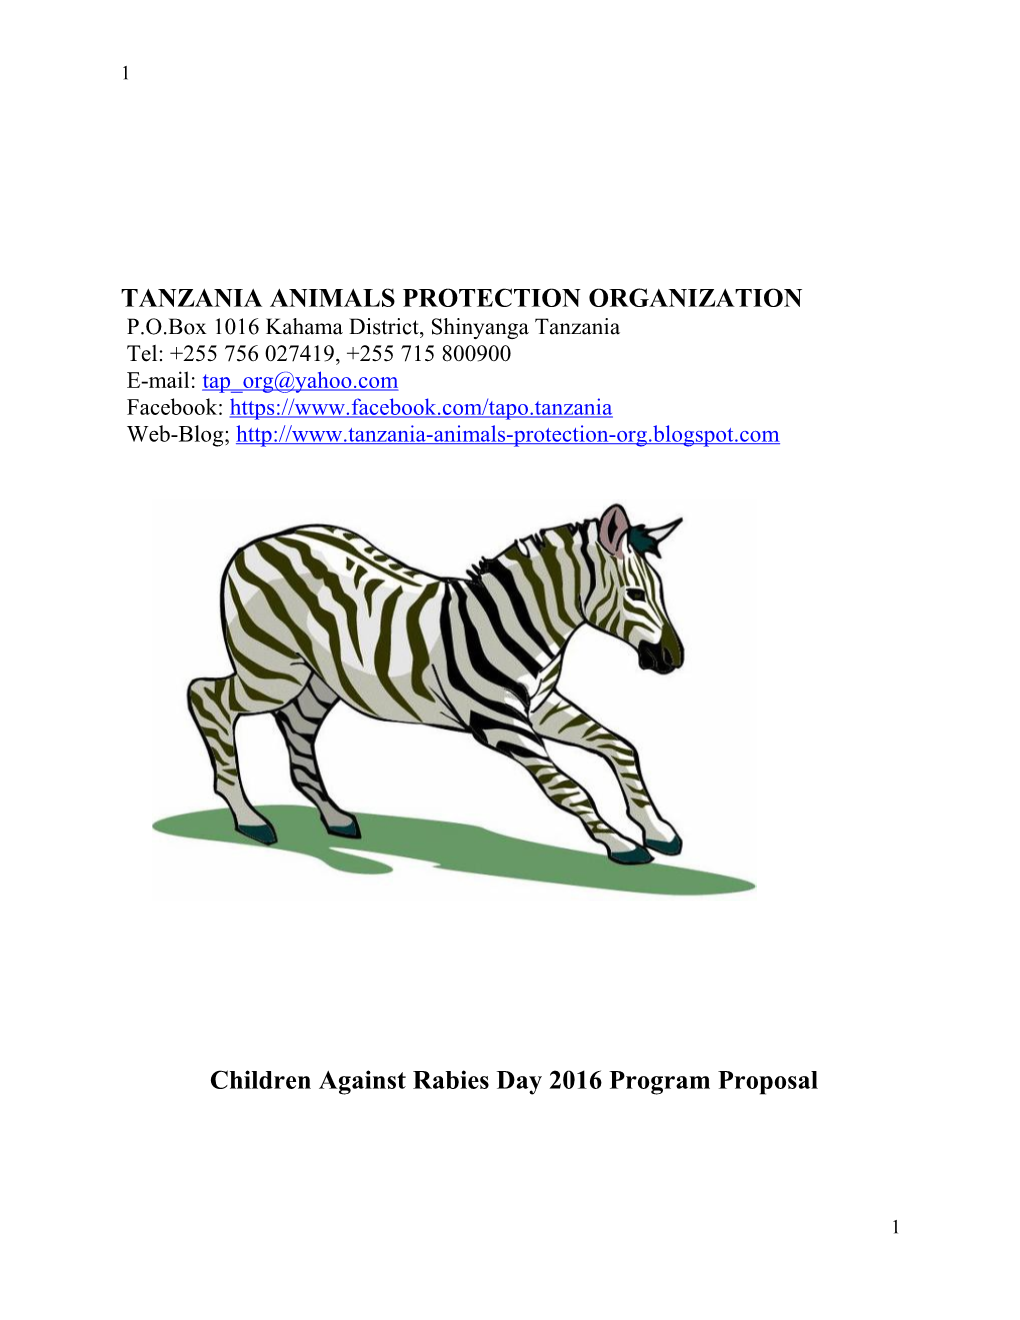 Children Againstrabies Day 2016 Program Proposal